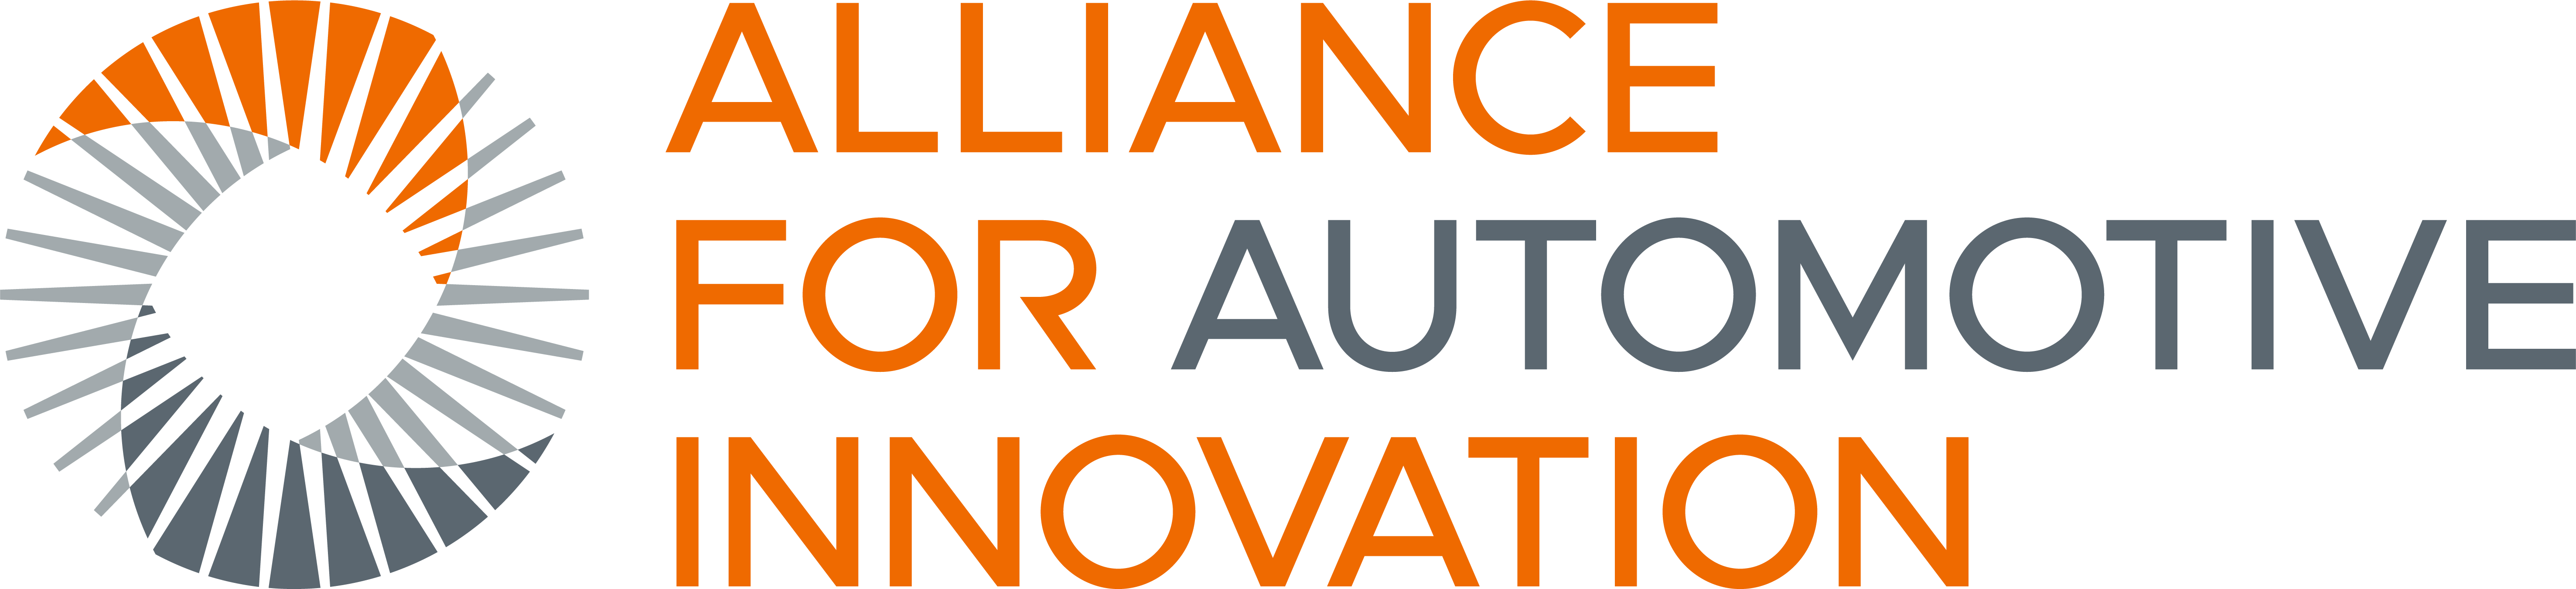 Alliance for Automotive Innovation